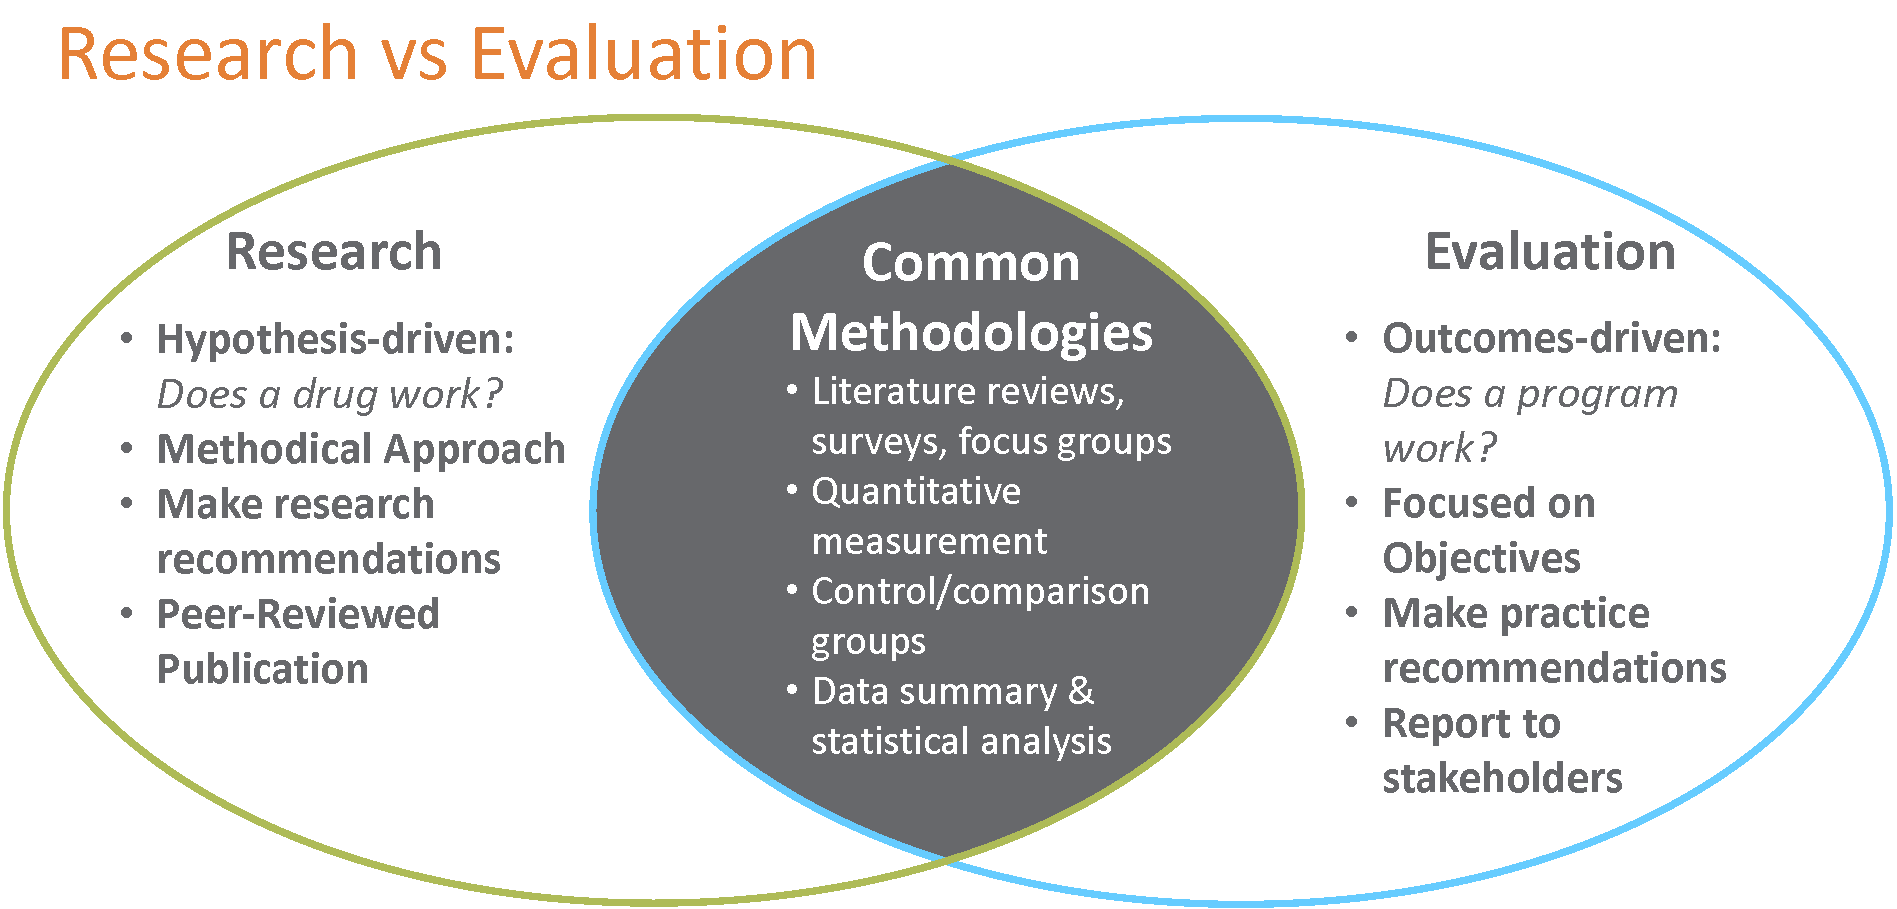 program evaluation hypothesis